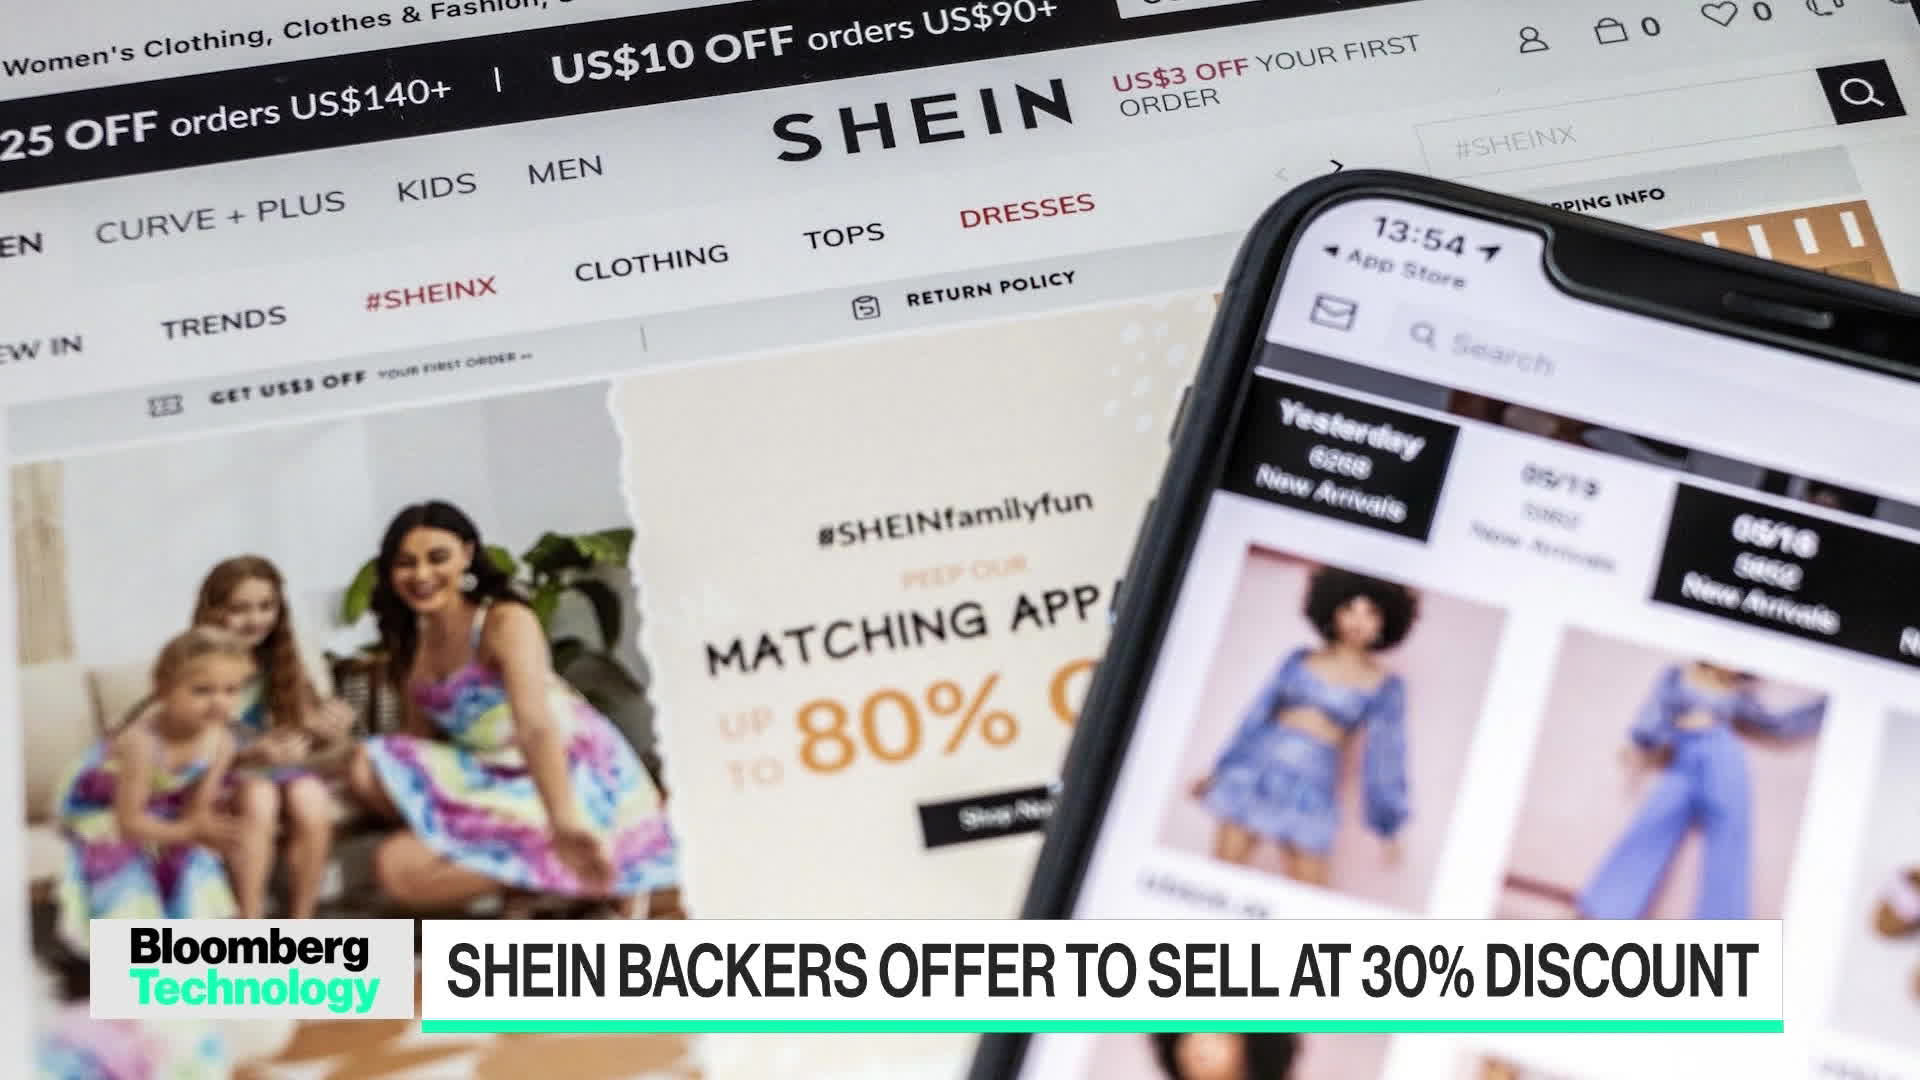 SHEIN Prepares for a $90 Billion IPO - Alliance for American